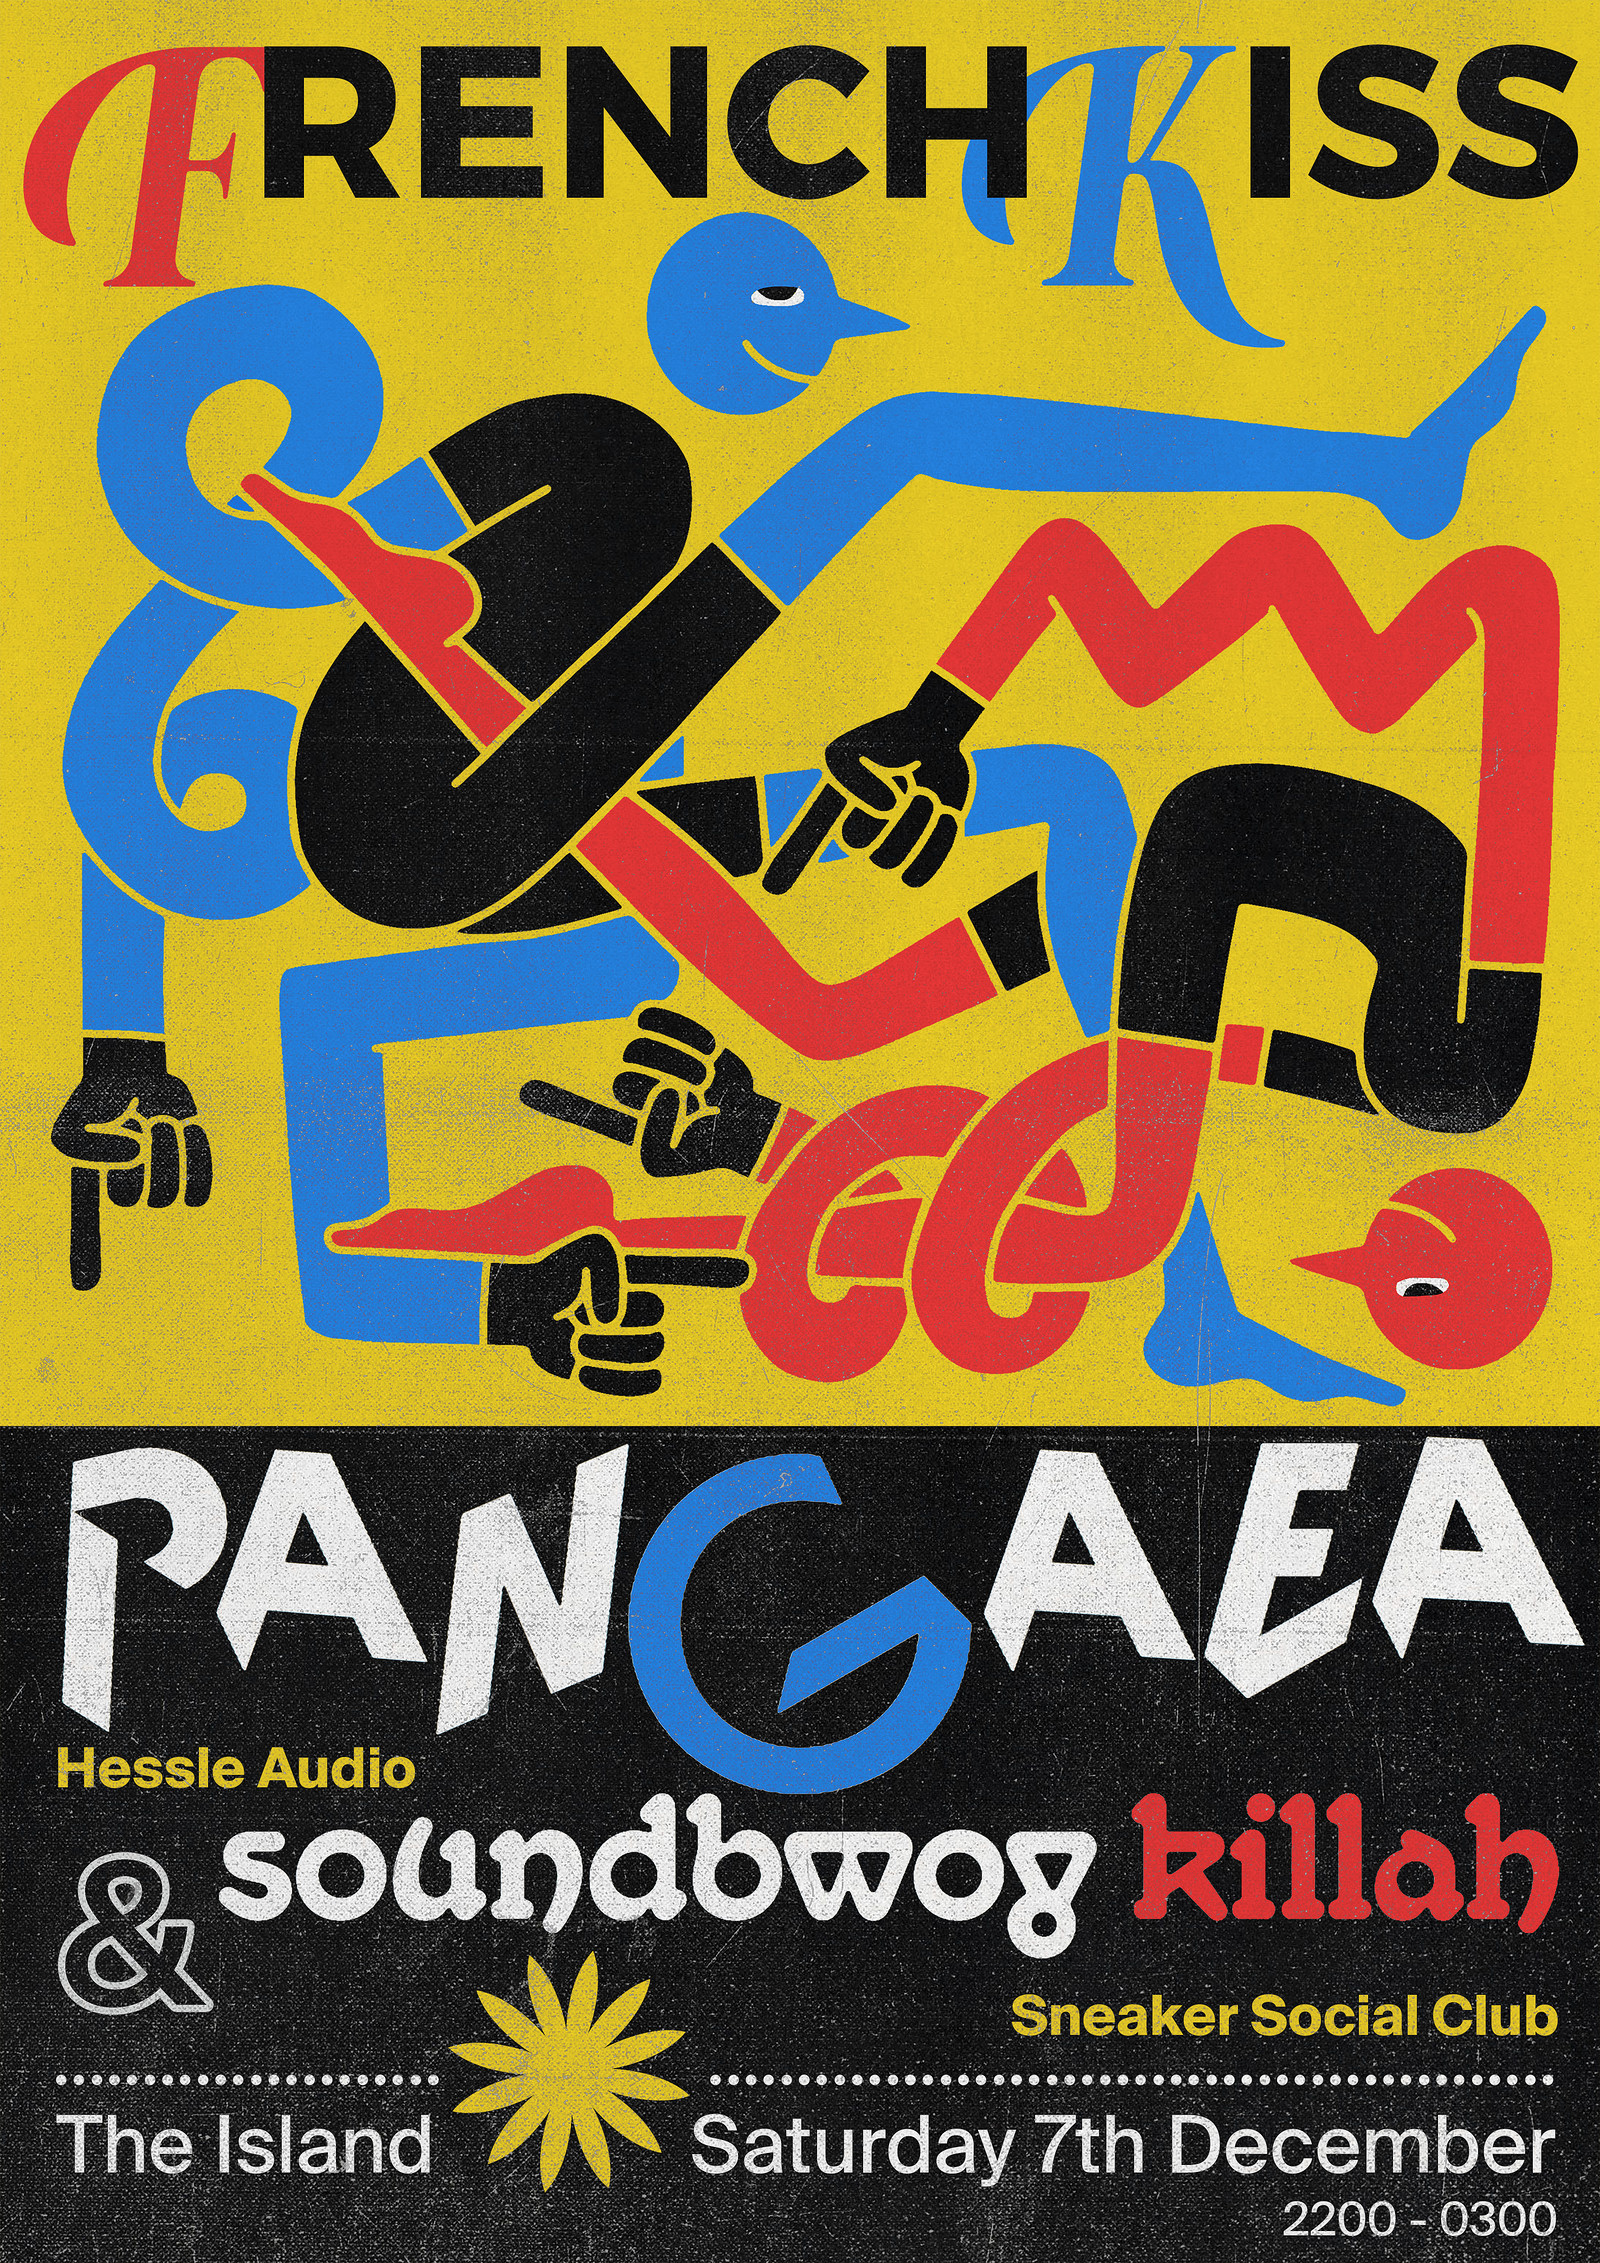 French Kiss presents: Pangaea & Soundbwoy Killah at The Island